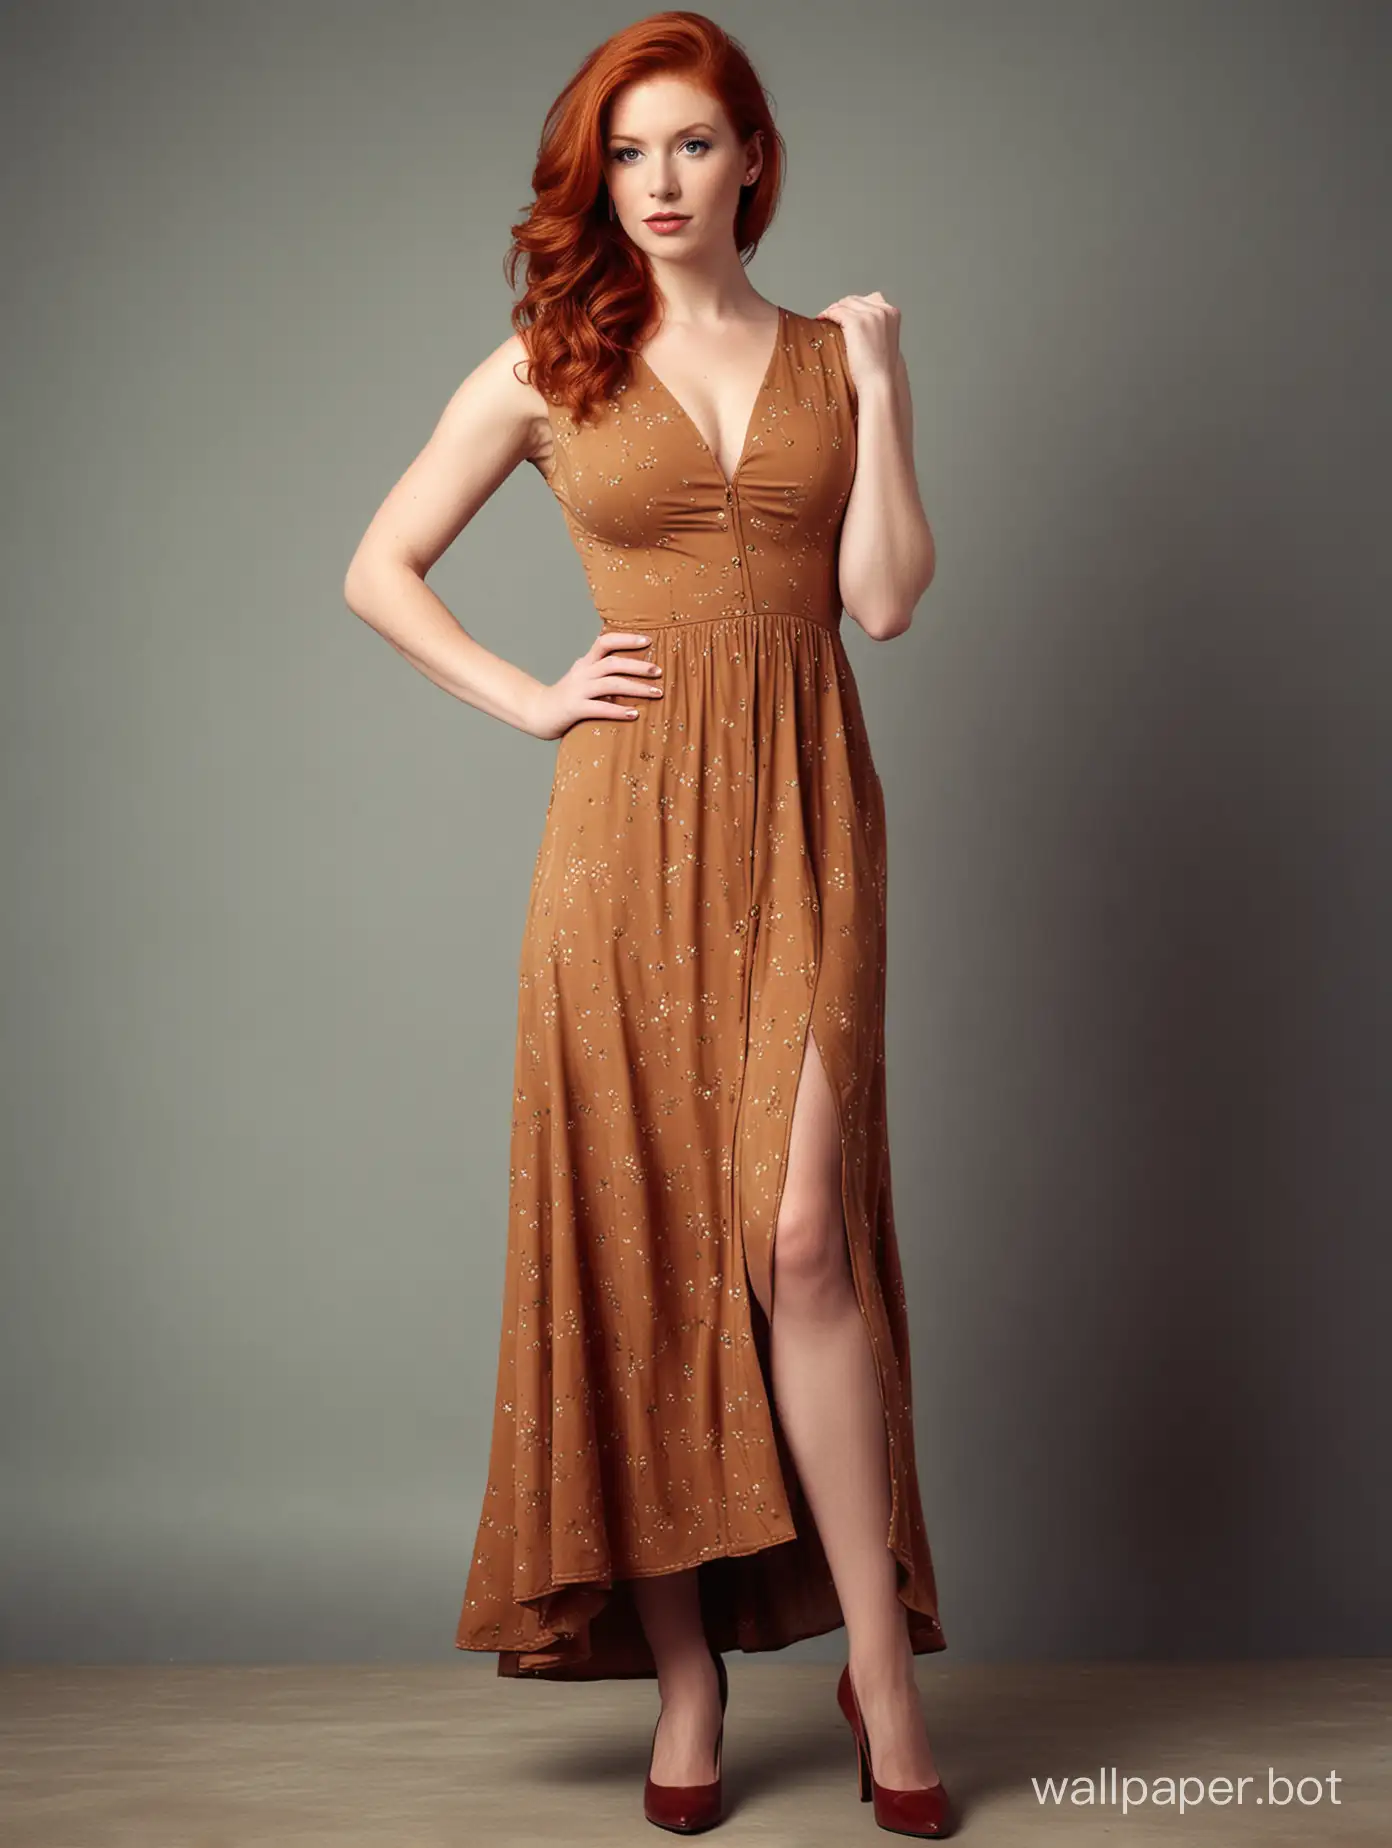 Vintage style, redhead female, big chest, sleeveless full slit dress, heels, standing.